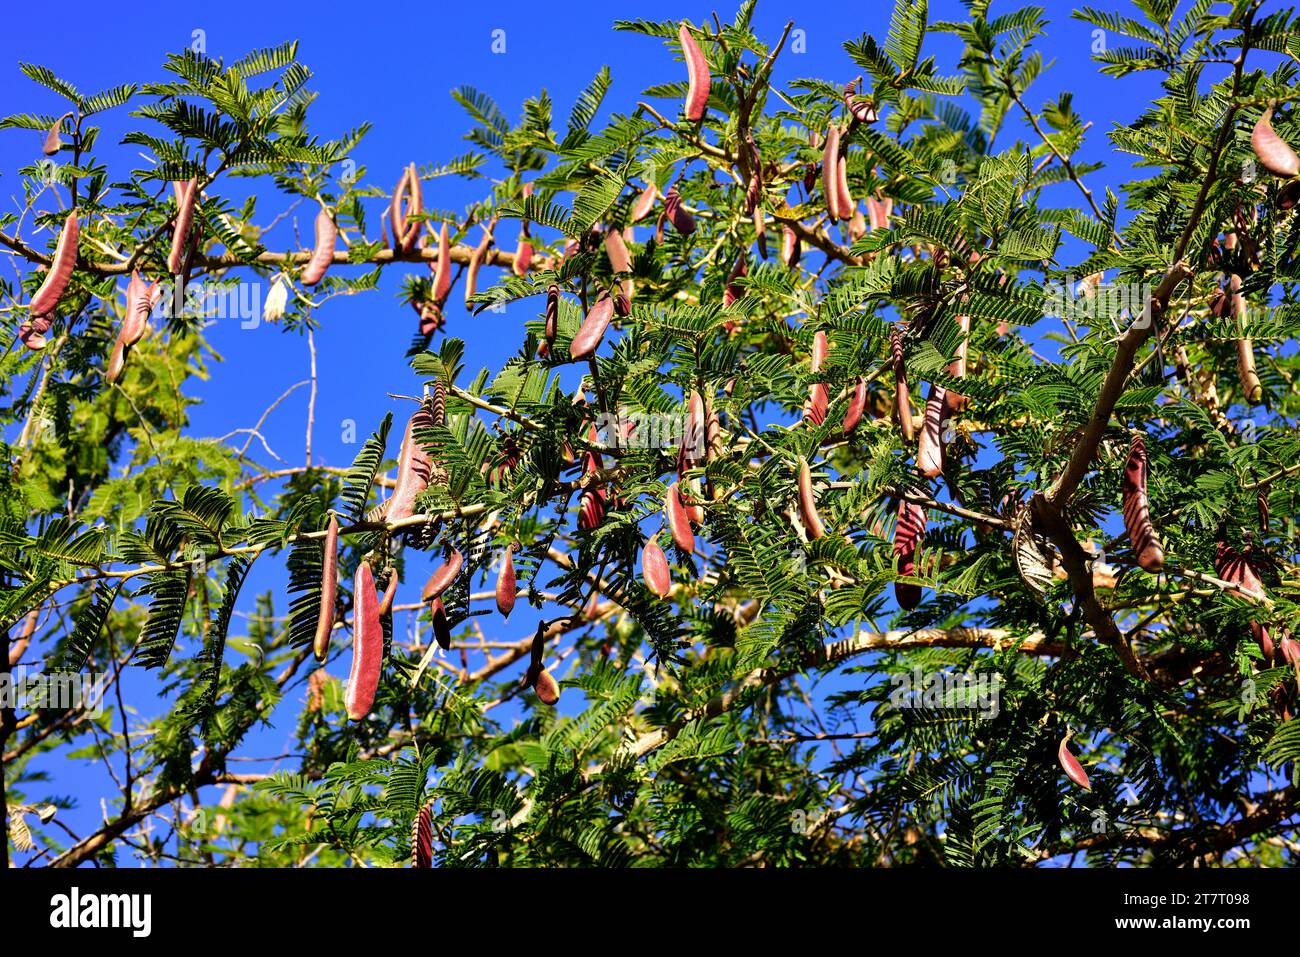 Paperbark thorn (Acacia sieberiana or Vachellia sieberiana) is a medicinal and toxic tree native to sub-saharan region. Fruits and leaves detail. Stock Photo